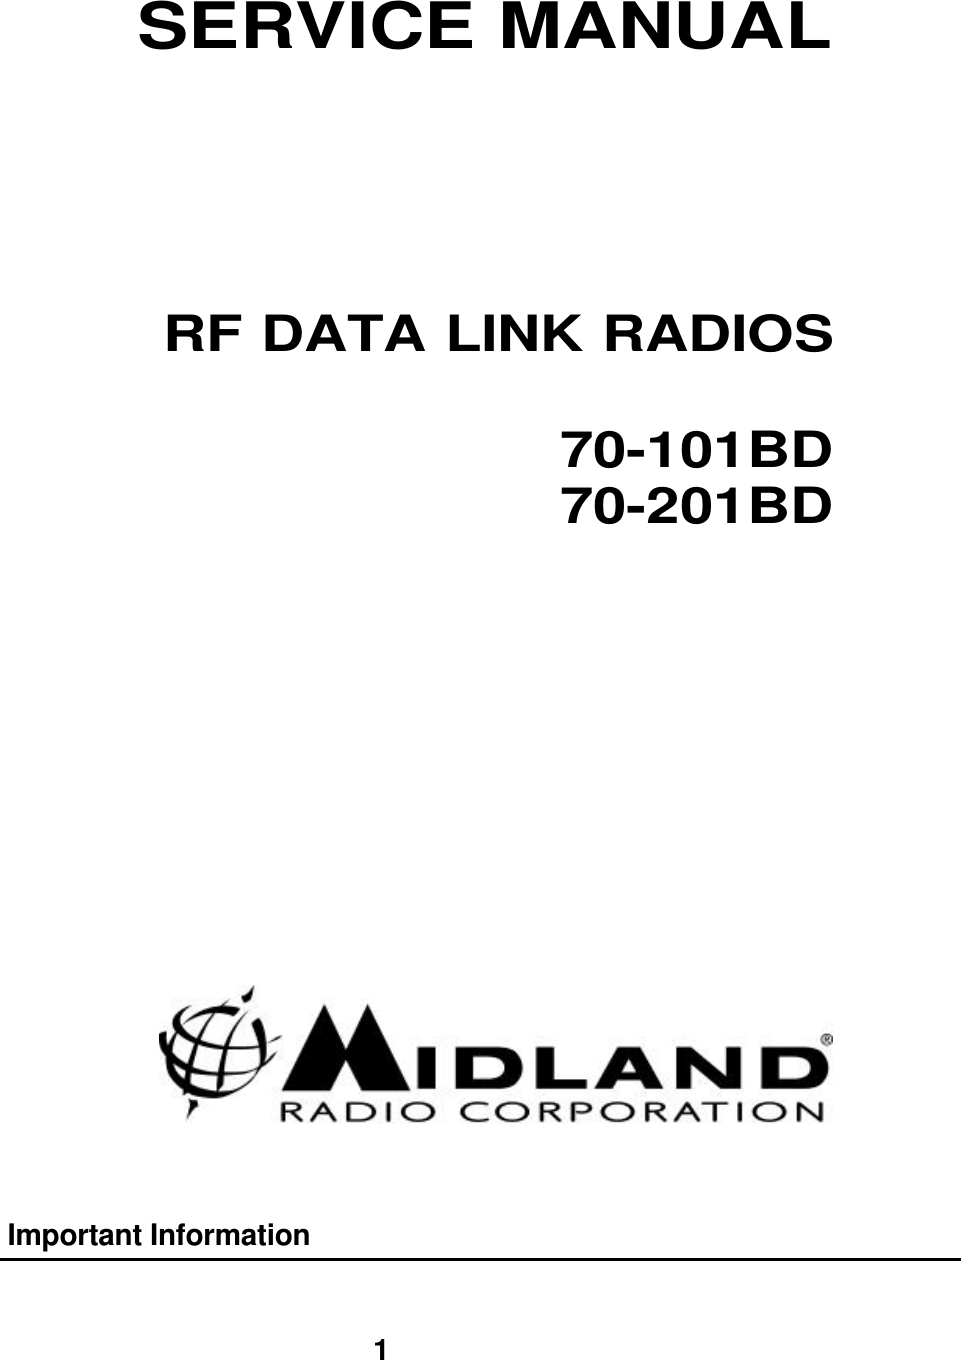 1 SERVICE MANUAL     RF DATA LINK RADIOS  70-101BD 70-201BD             Important Information  